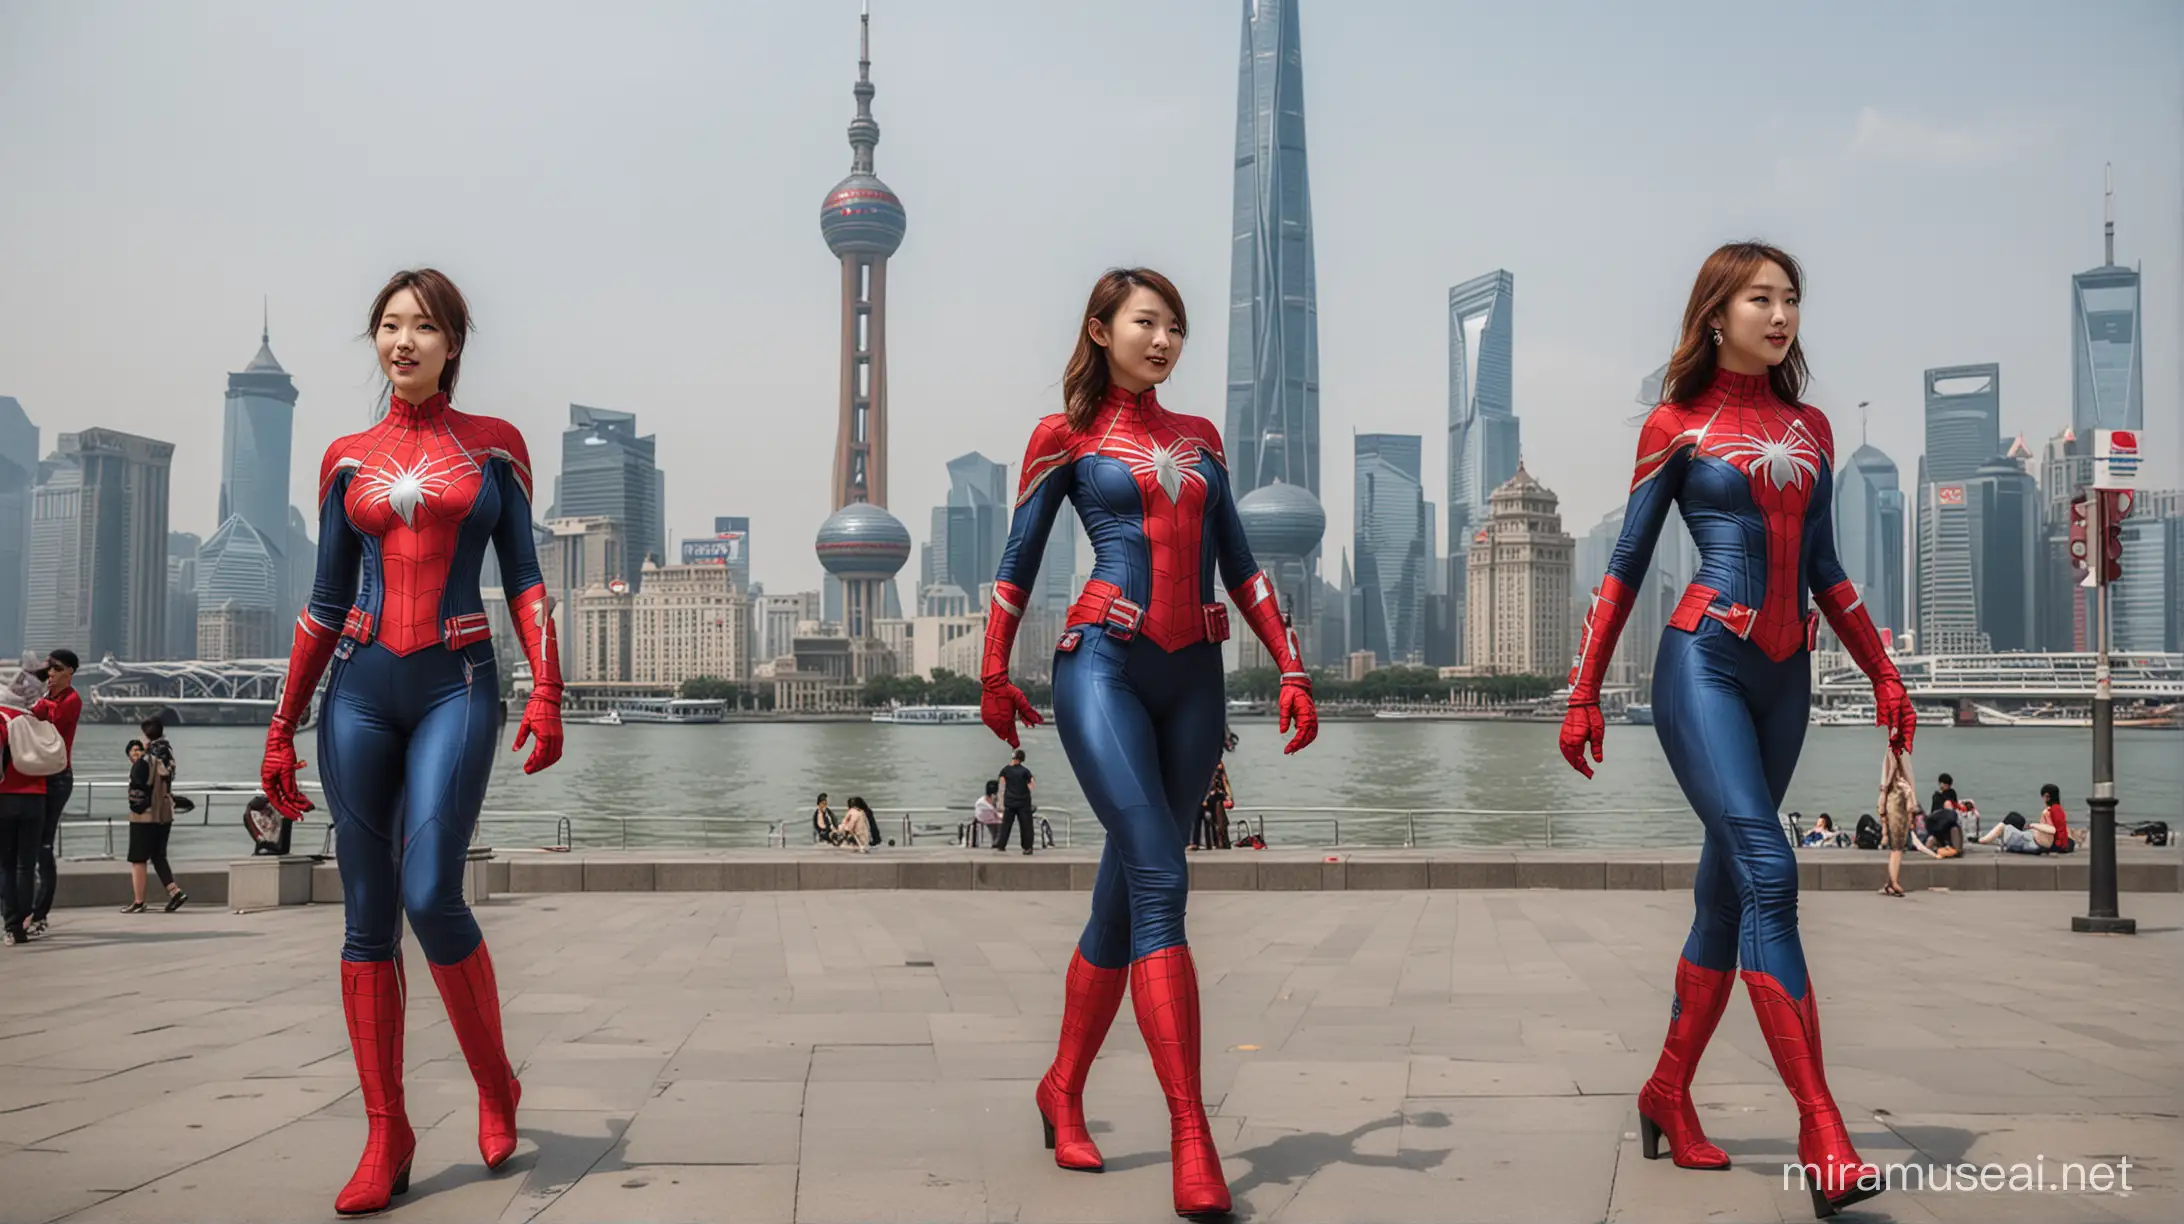 Superhero Ladies Stroll the Bund with Shanghai Skyline